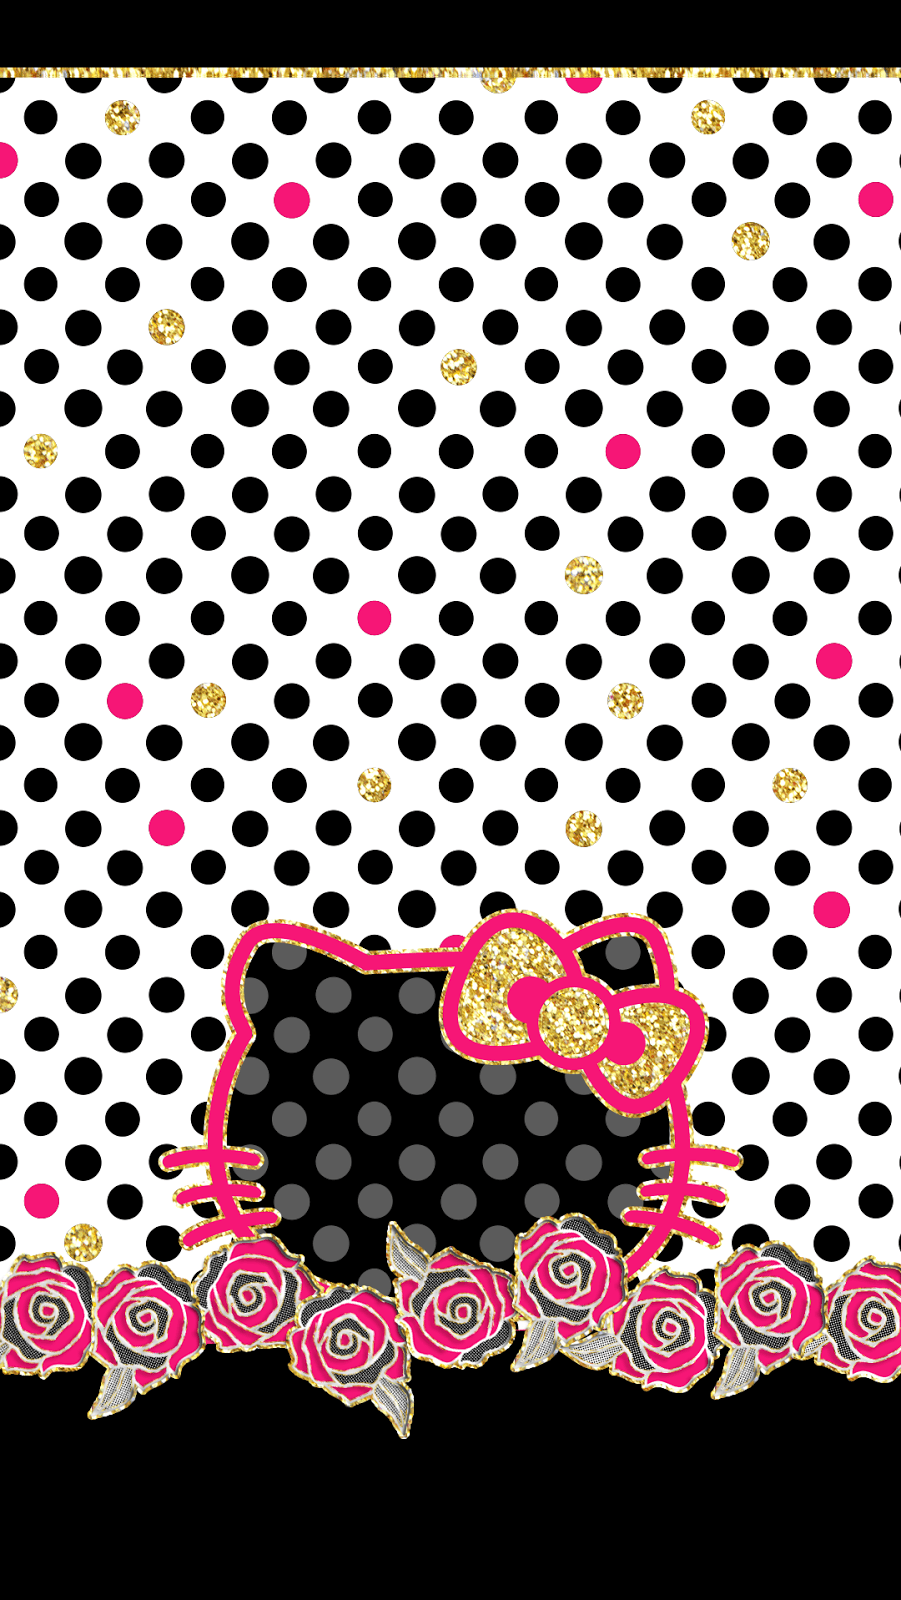 Kate Spade Hello Kitty Phone Wallpaper Risspected